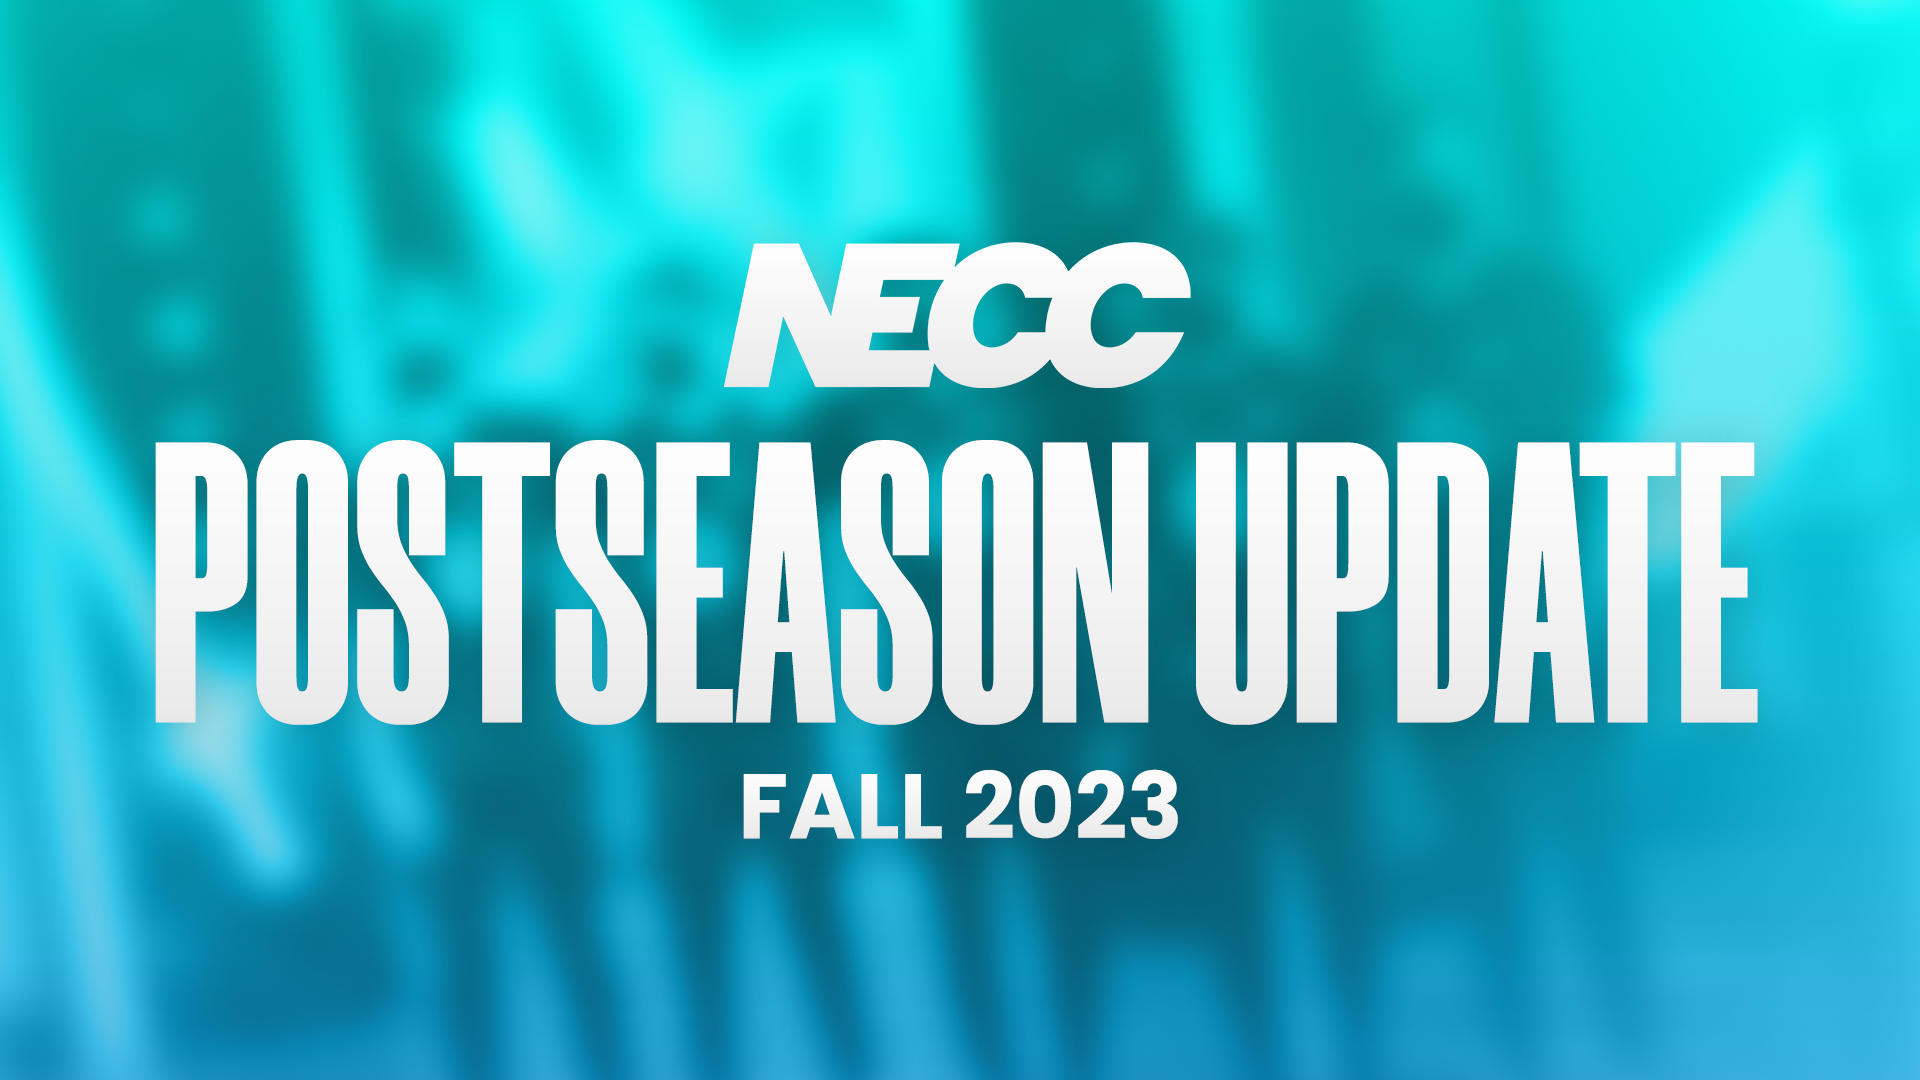 NECC Shares Information about Fall Postseason